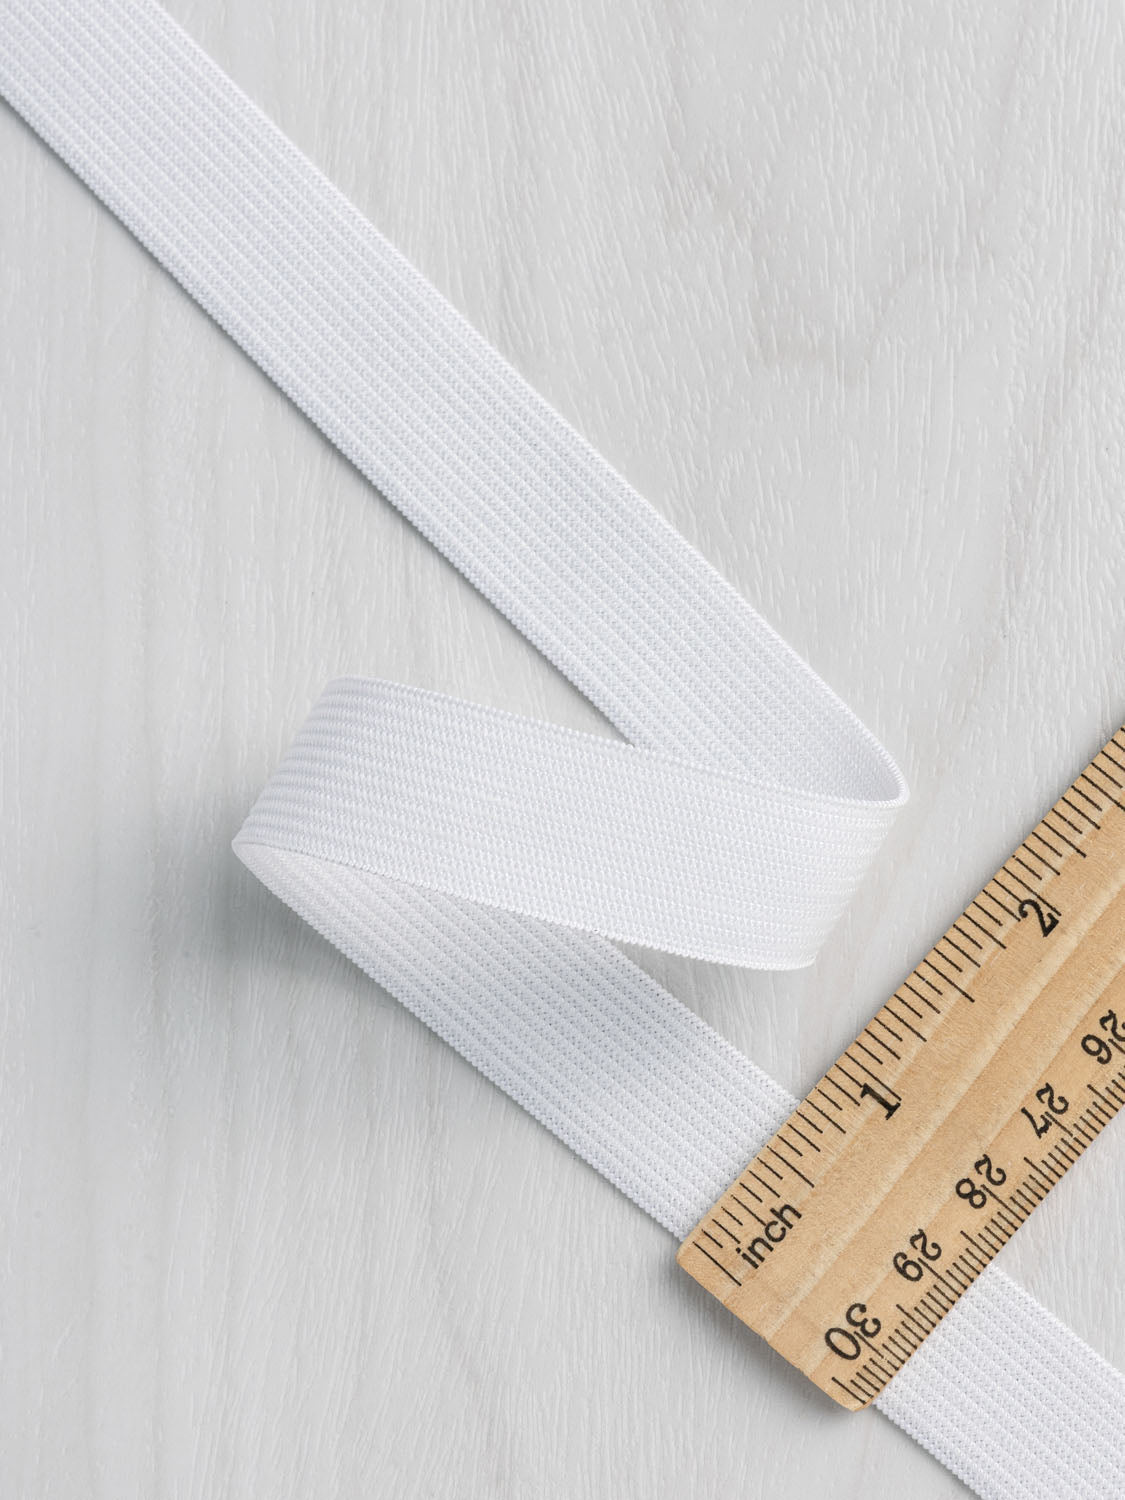 2-inch White Plush Elastic,Soft Comfortable Sewing Elastic - 3 Yards